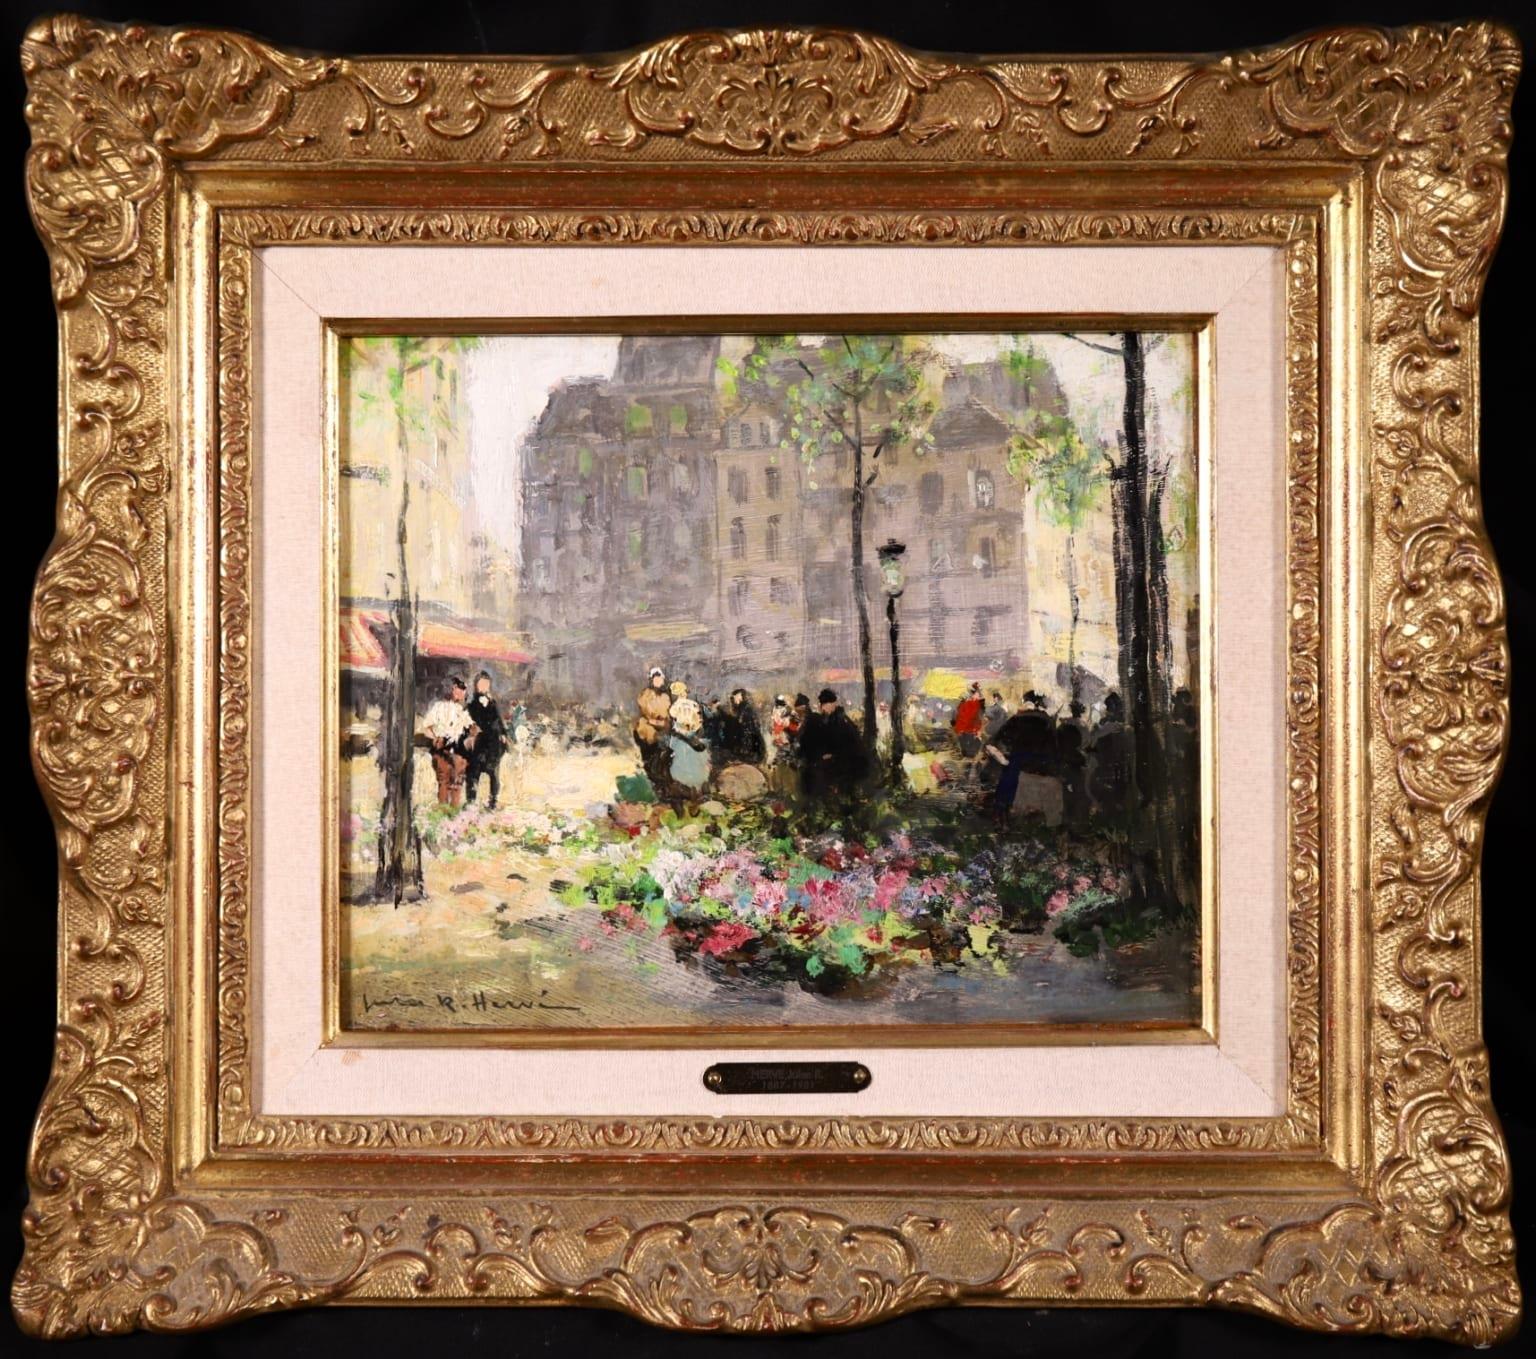 Flower Market - Impressionist Oil, Figures in City Landscape by Jules Rene Herve - Painting by Jules René Hervé